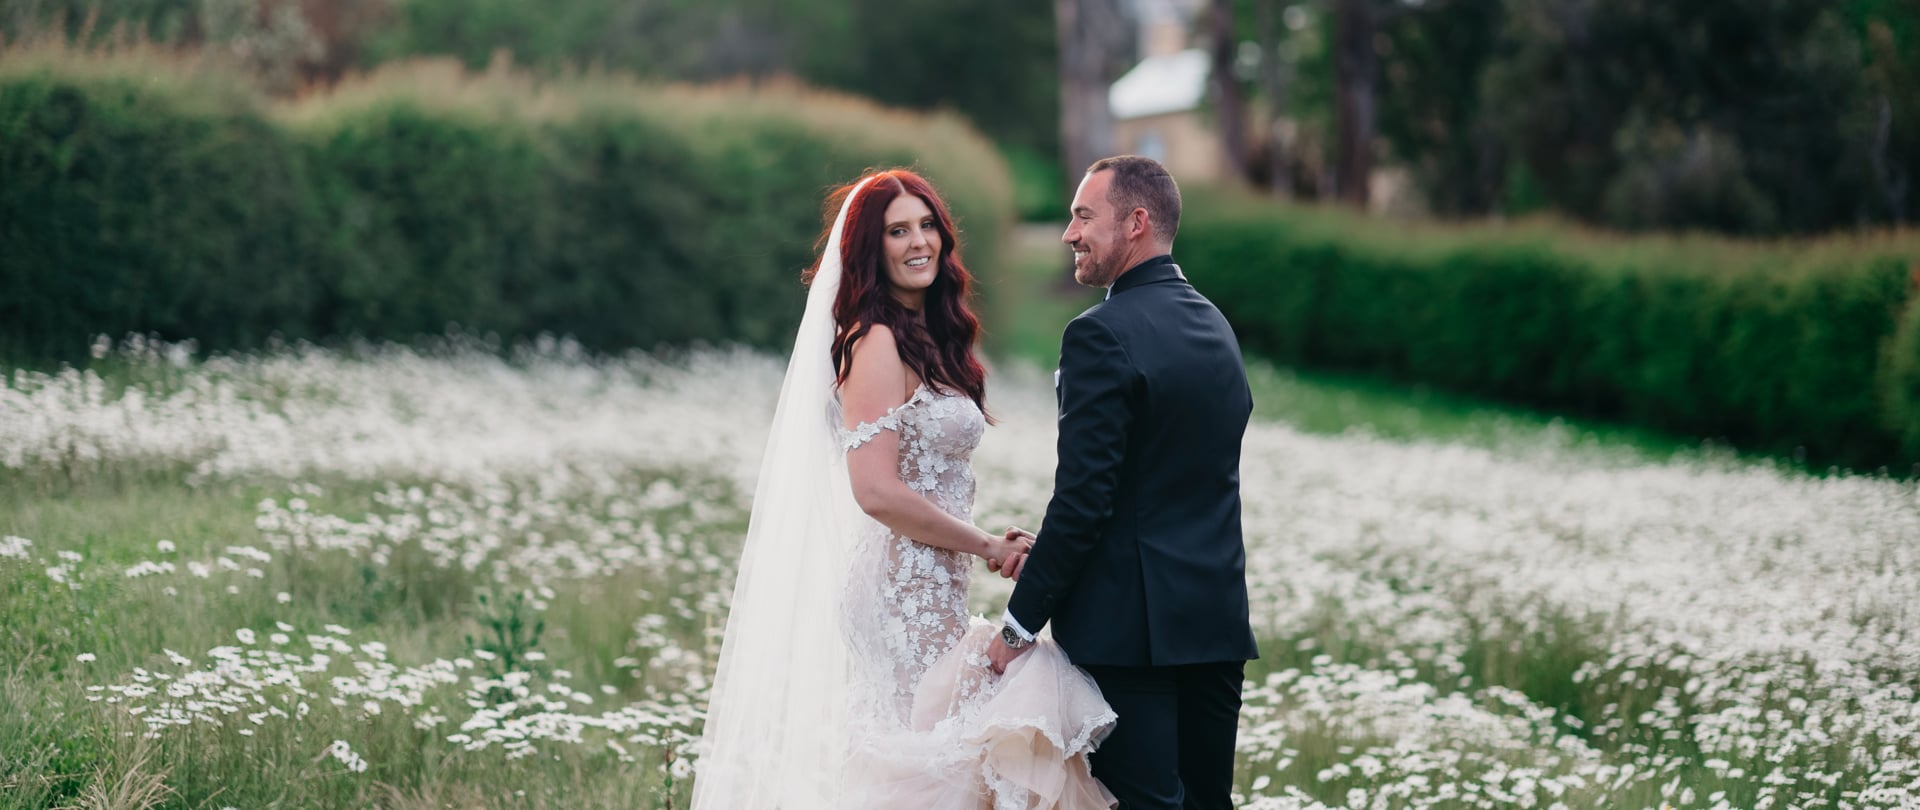 Rachel & Joel Wedding Video Filmed at Tasmania, Australia